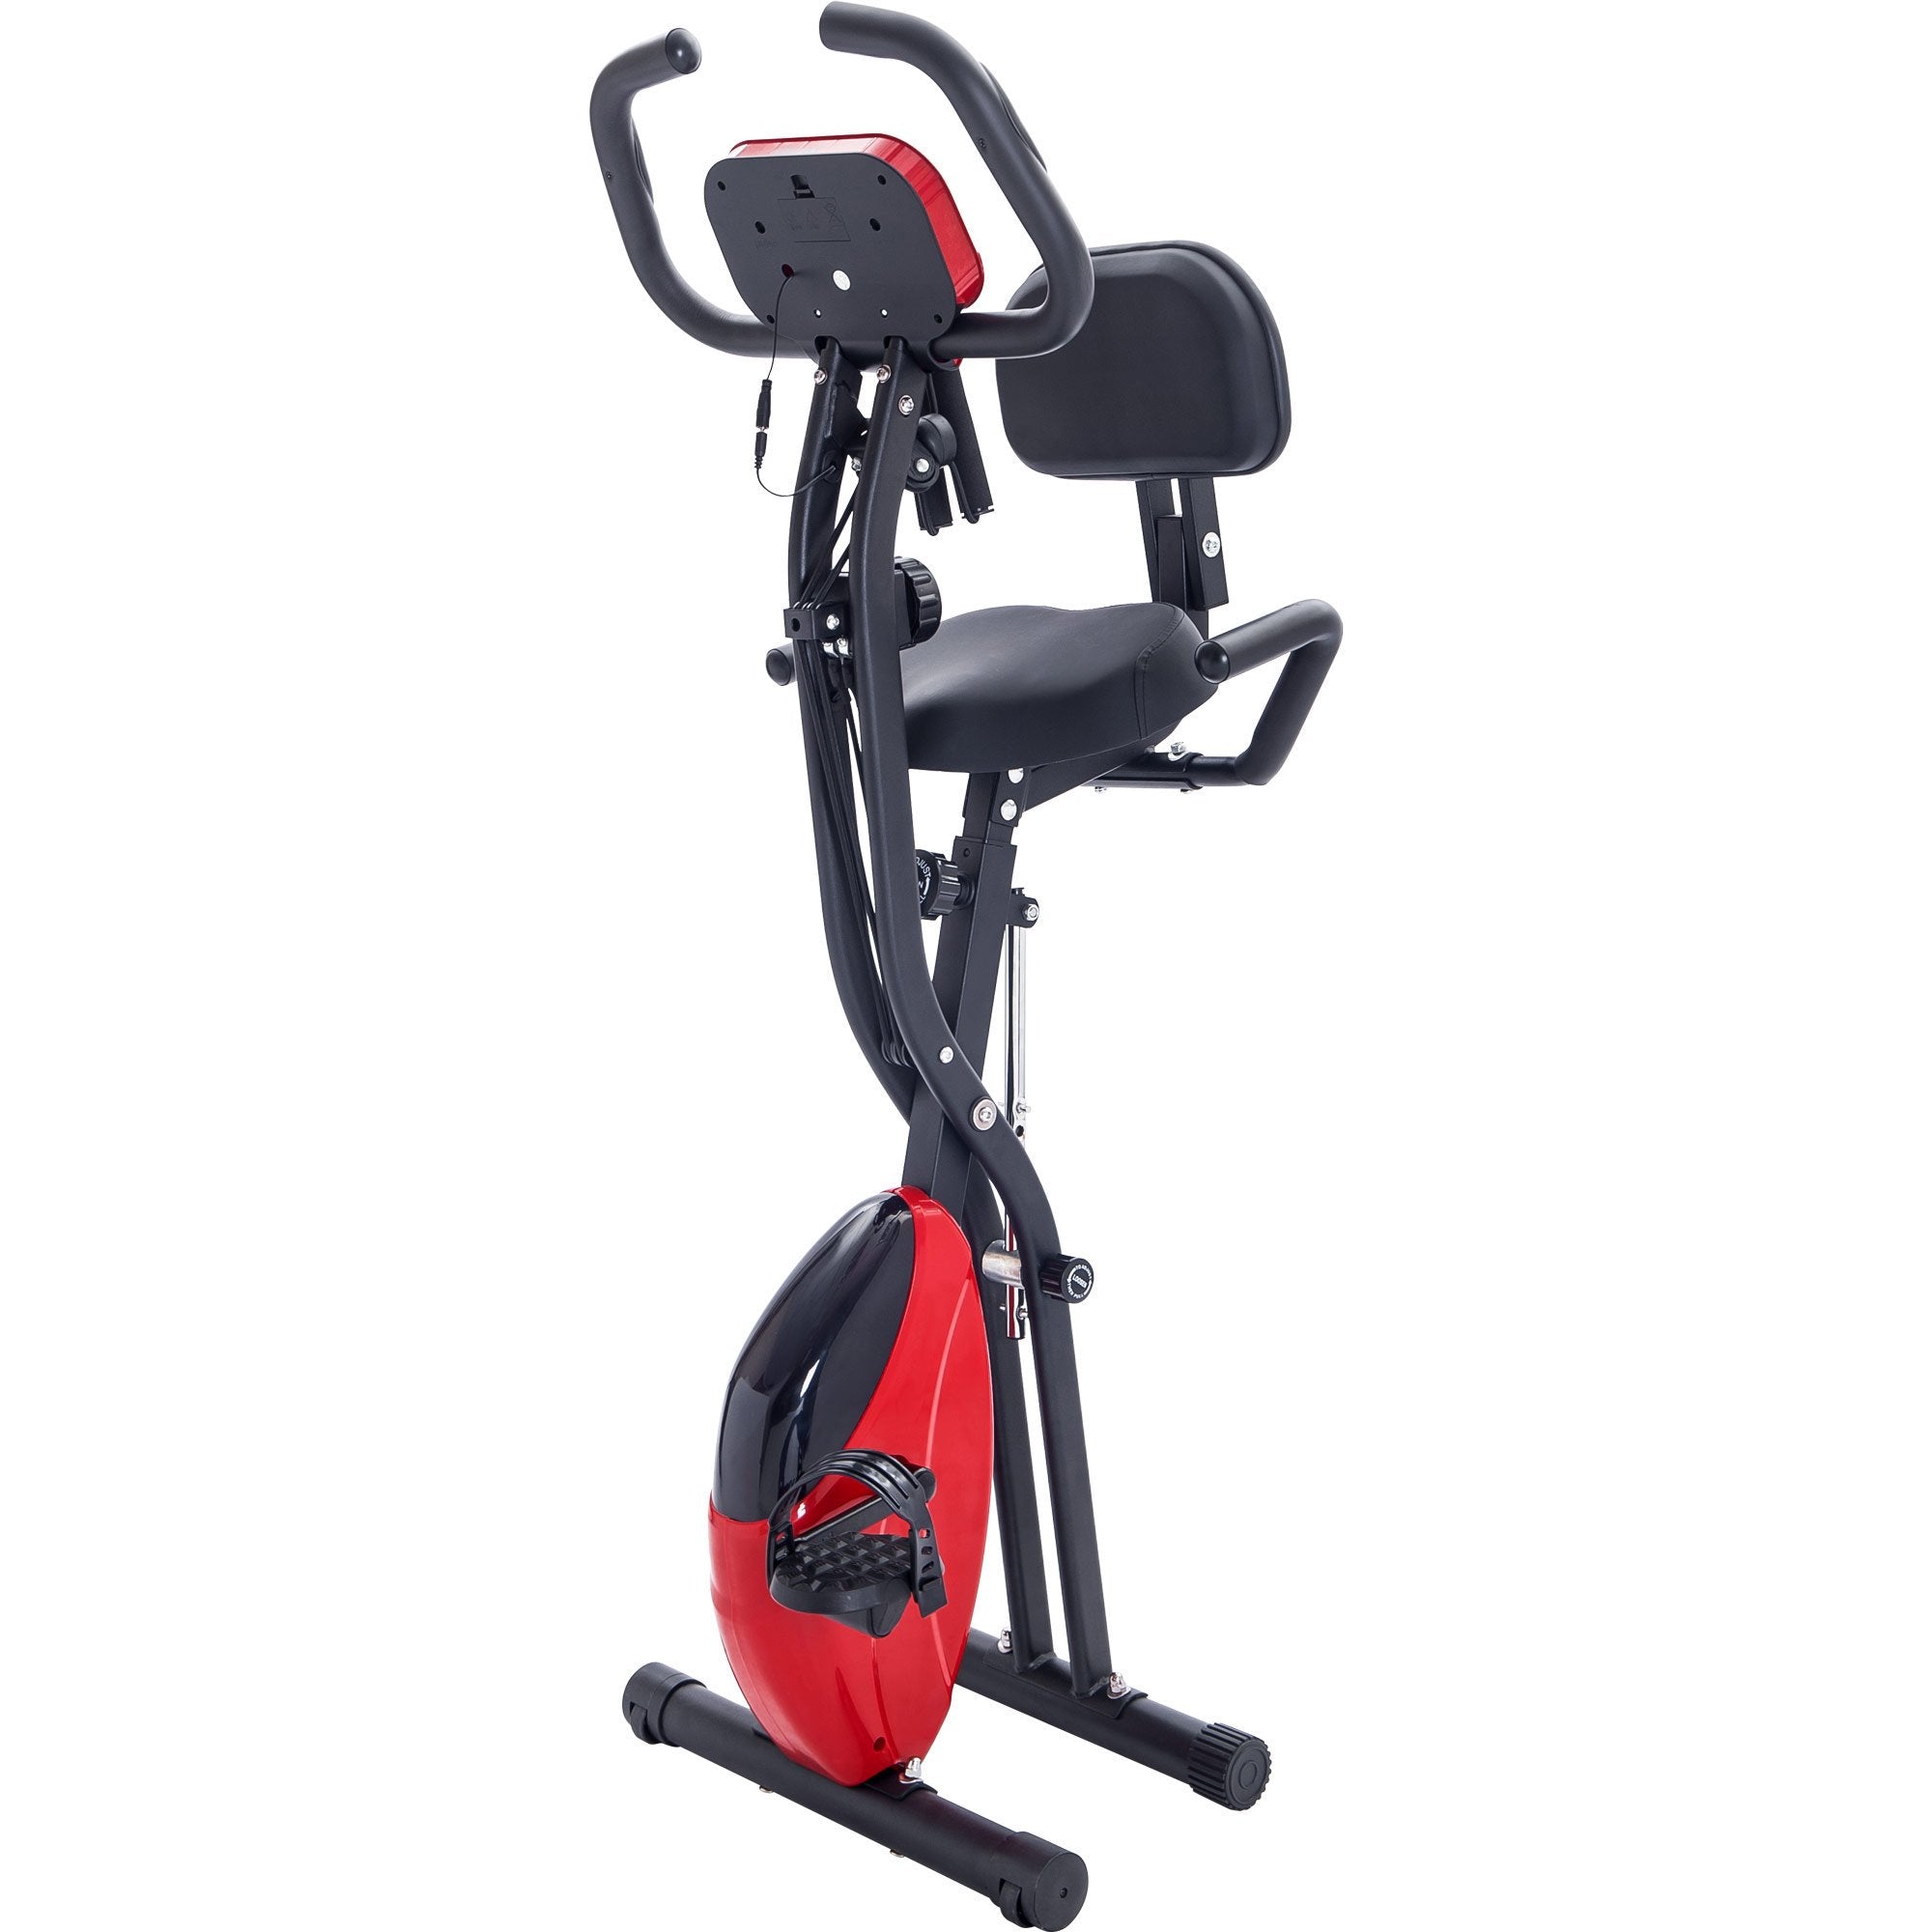 Folding Exercise Bike with 10-Level Adjustable Resistance, Arm Bands and Backrest